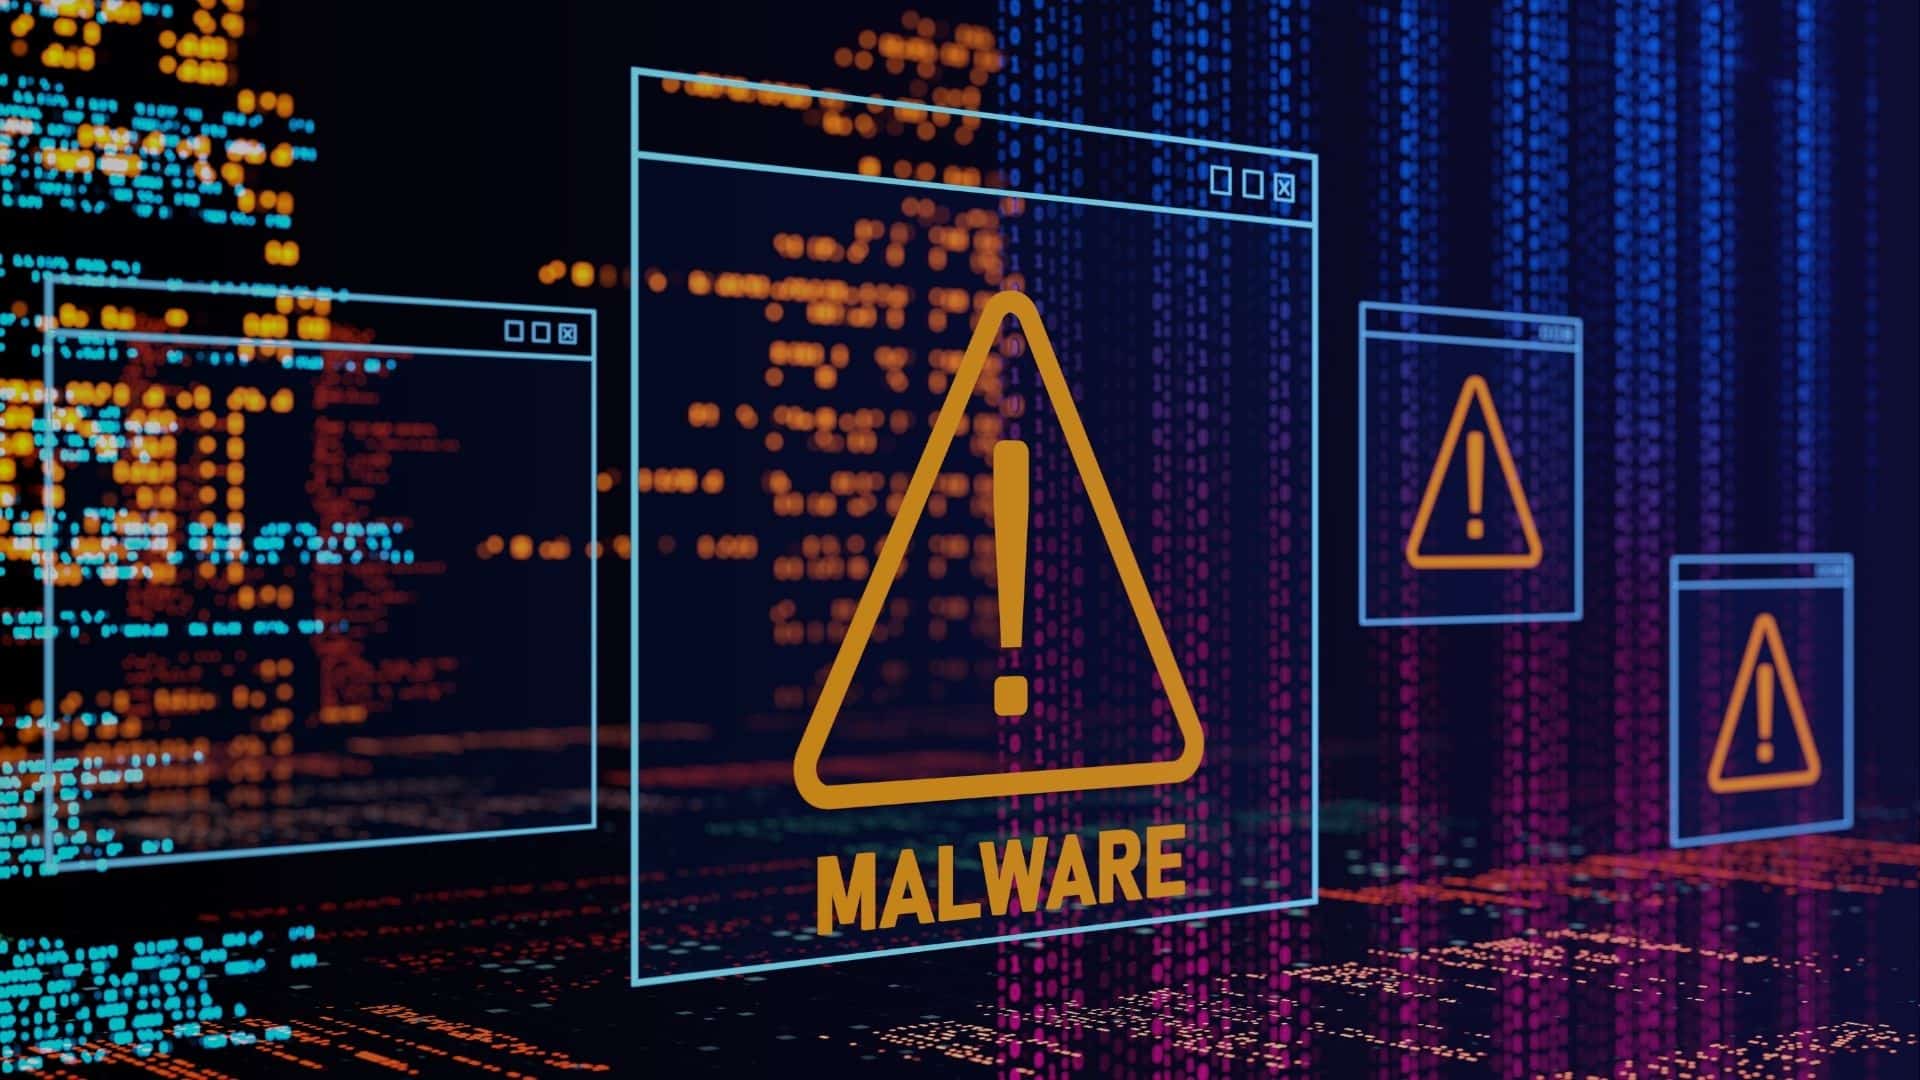 scanning for vulnerabilities, malware